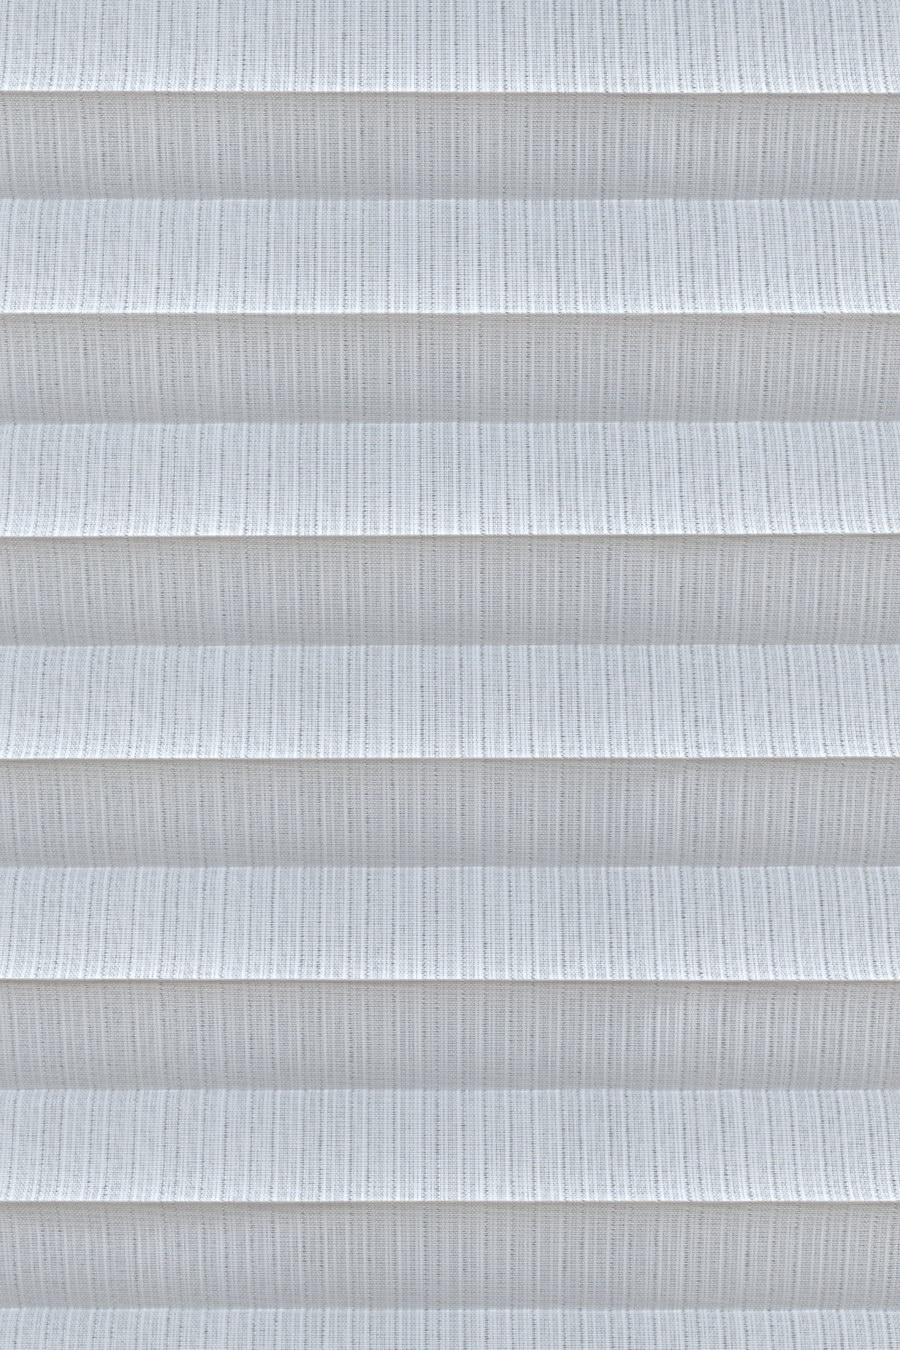 Ткань TRANSPARENT STYLE WHITE 4011 для штор плиссе